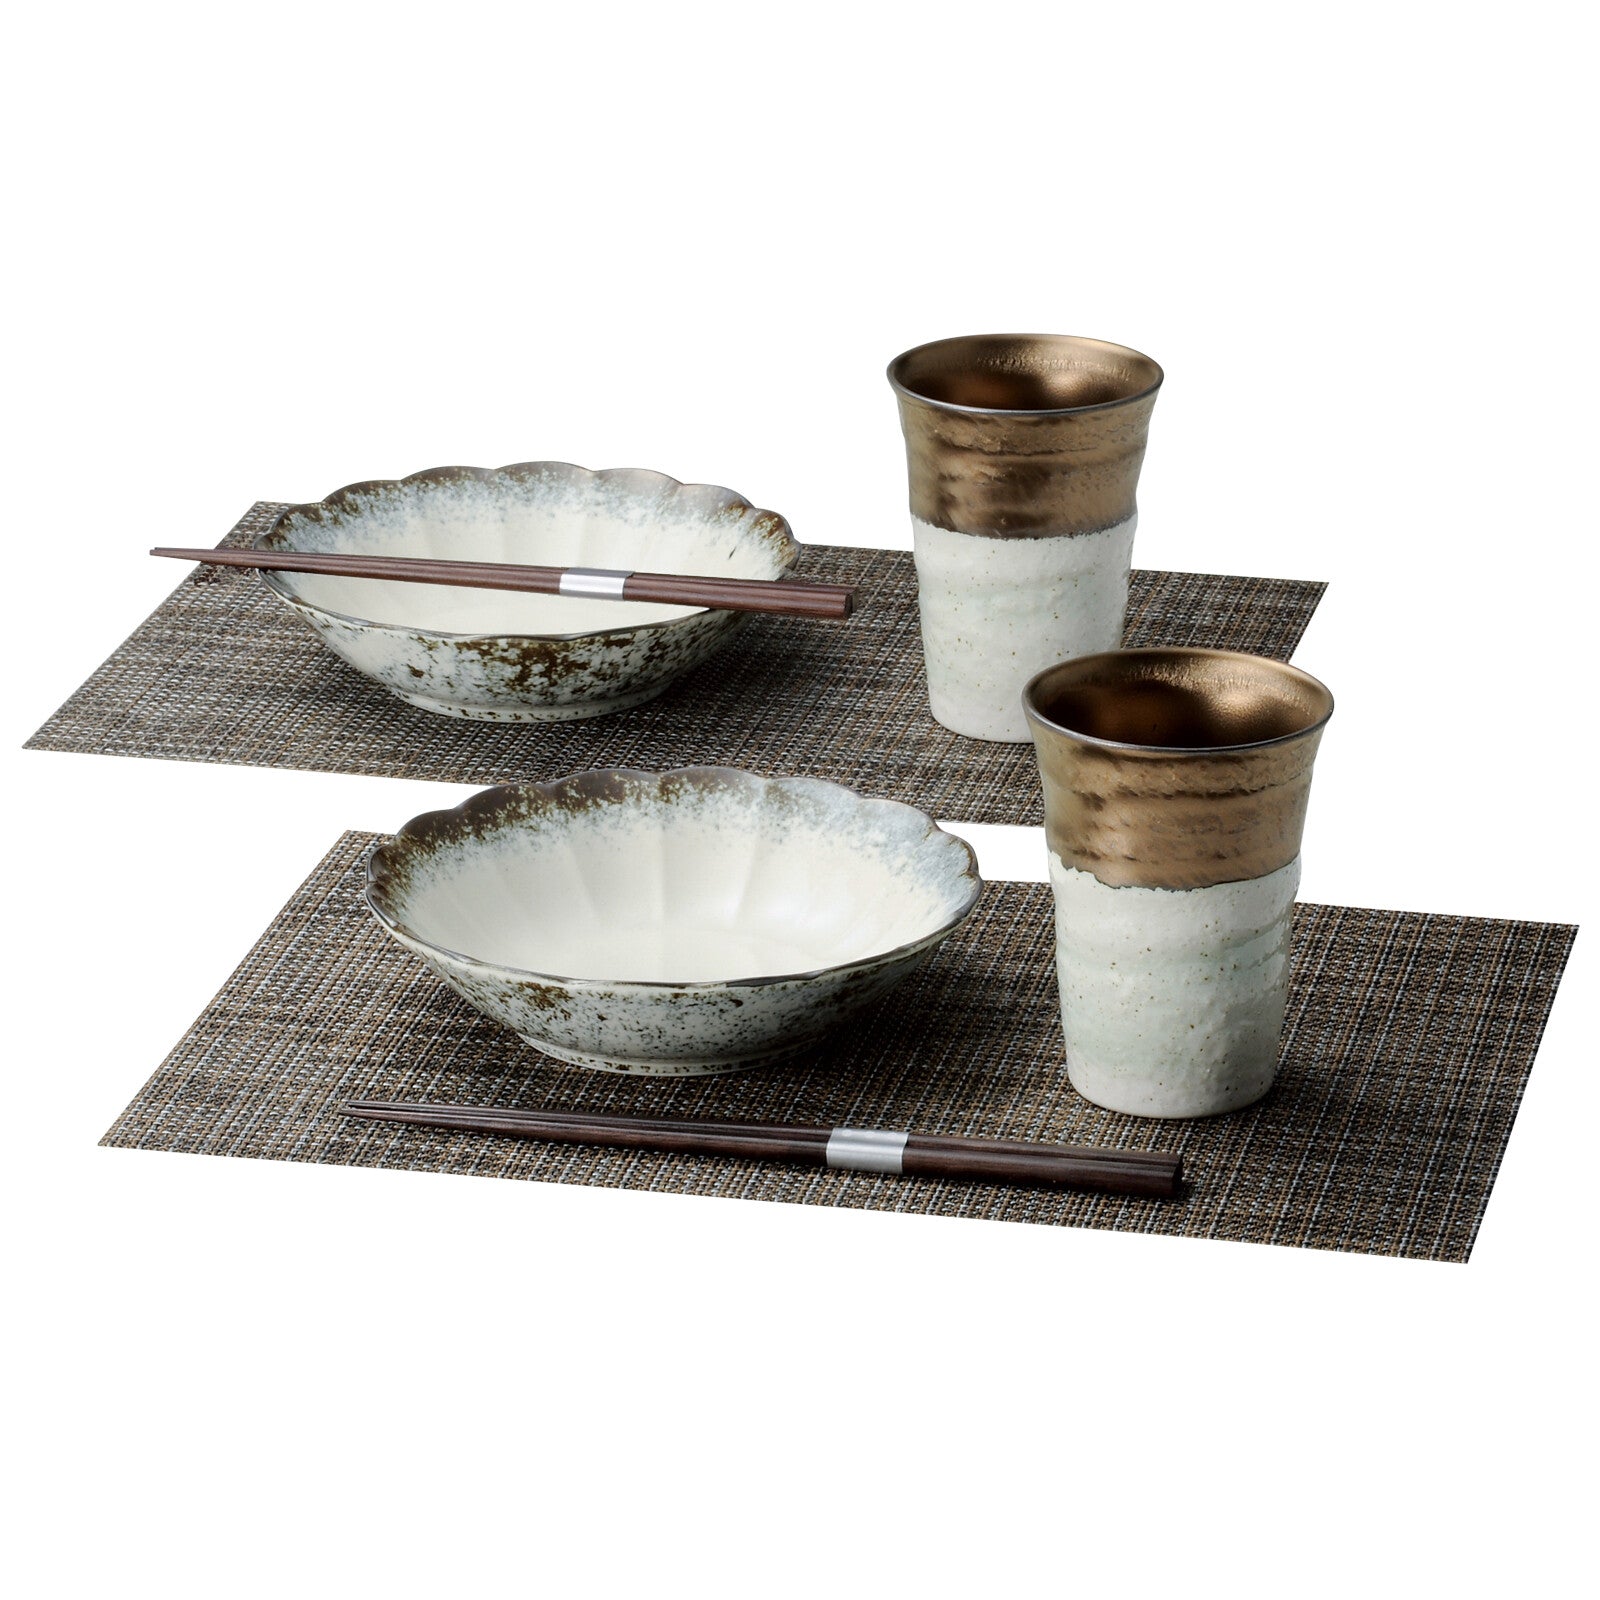 Minoyaki Quail Shell Yusai Rotana Tableware Gift Set - Dinnerware for Two